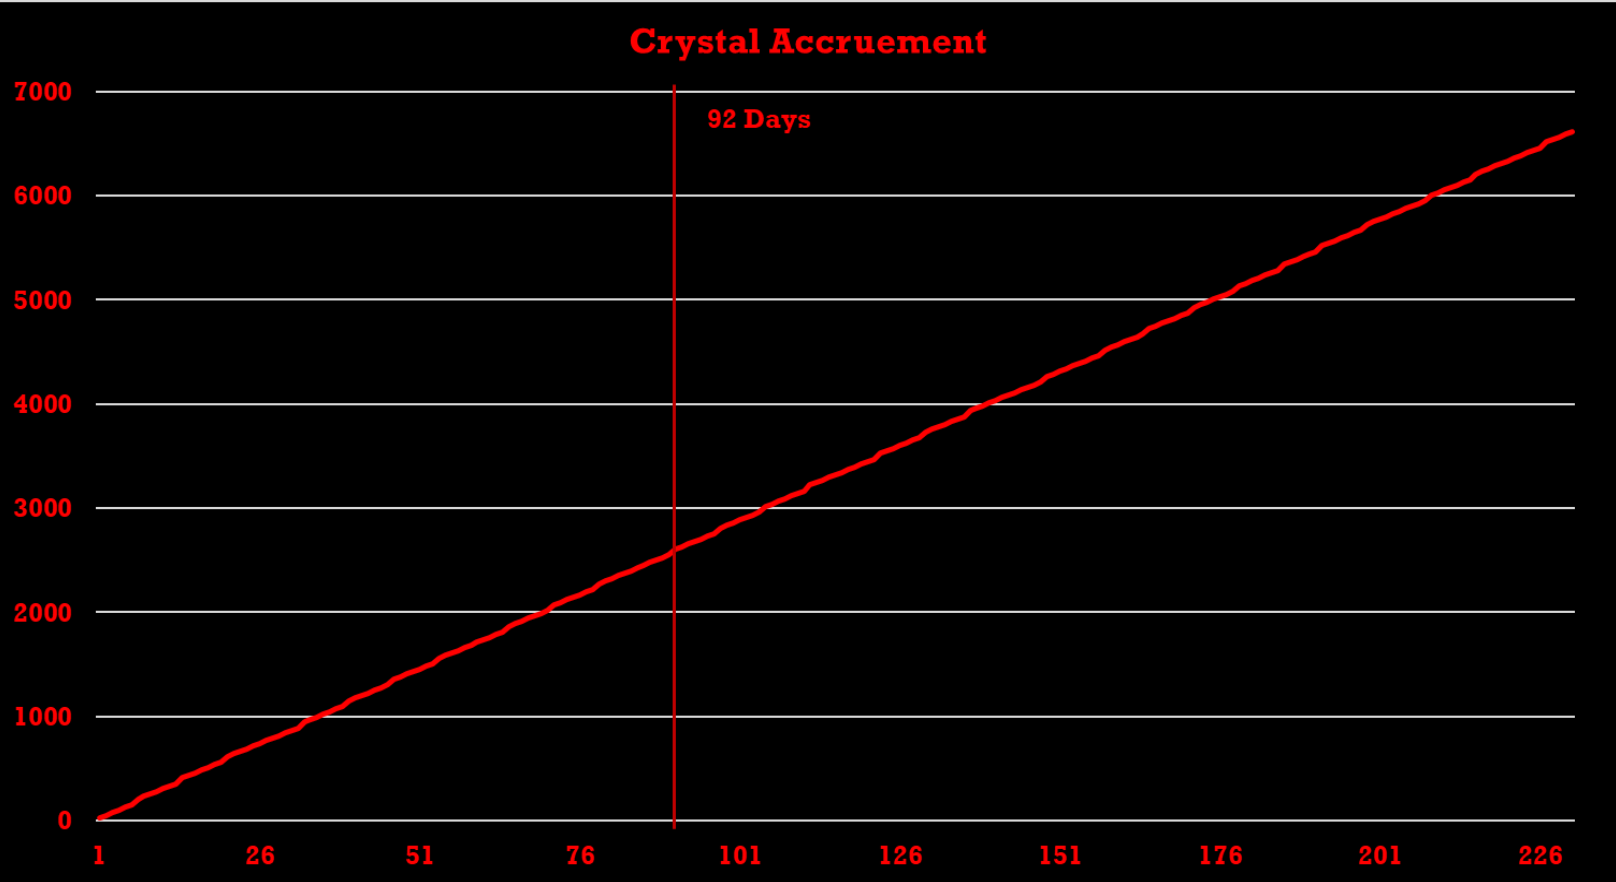 Crystal Accruement